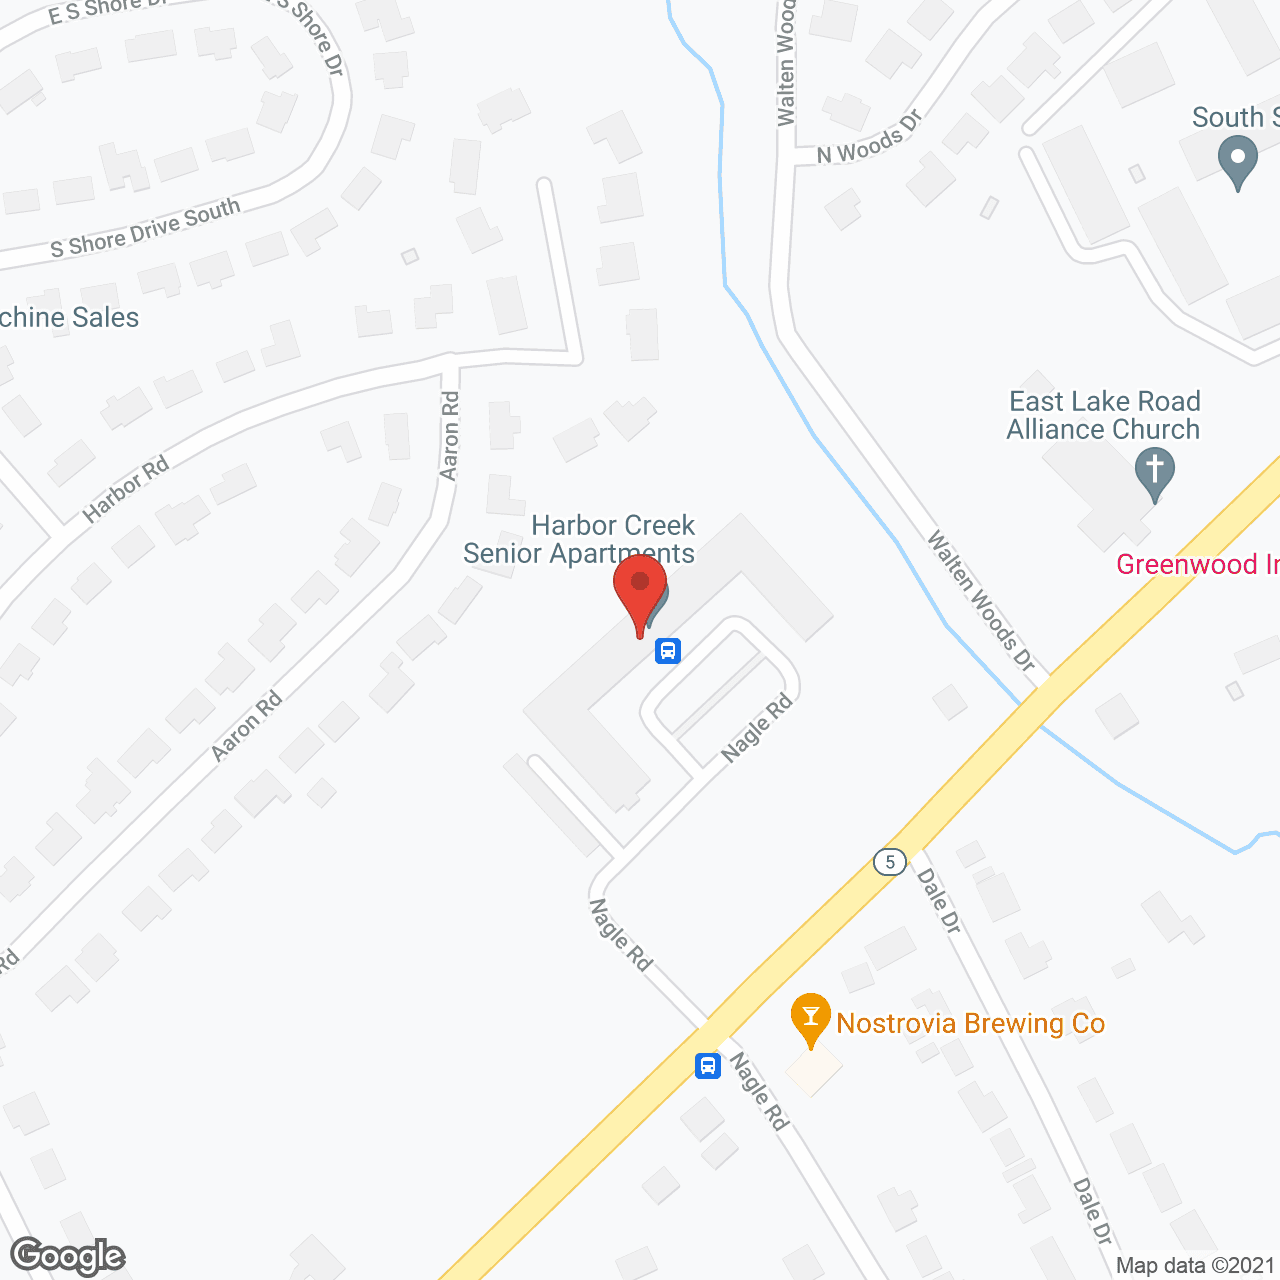 Harborcreek Senior Apartments in google map